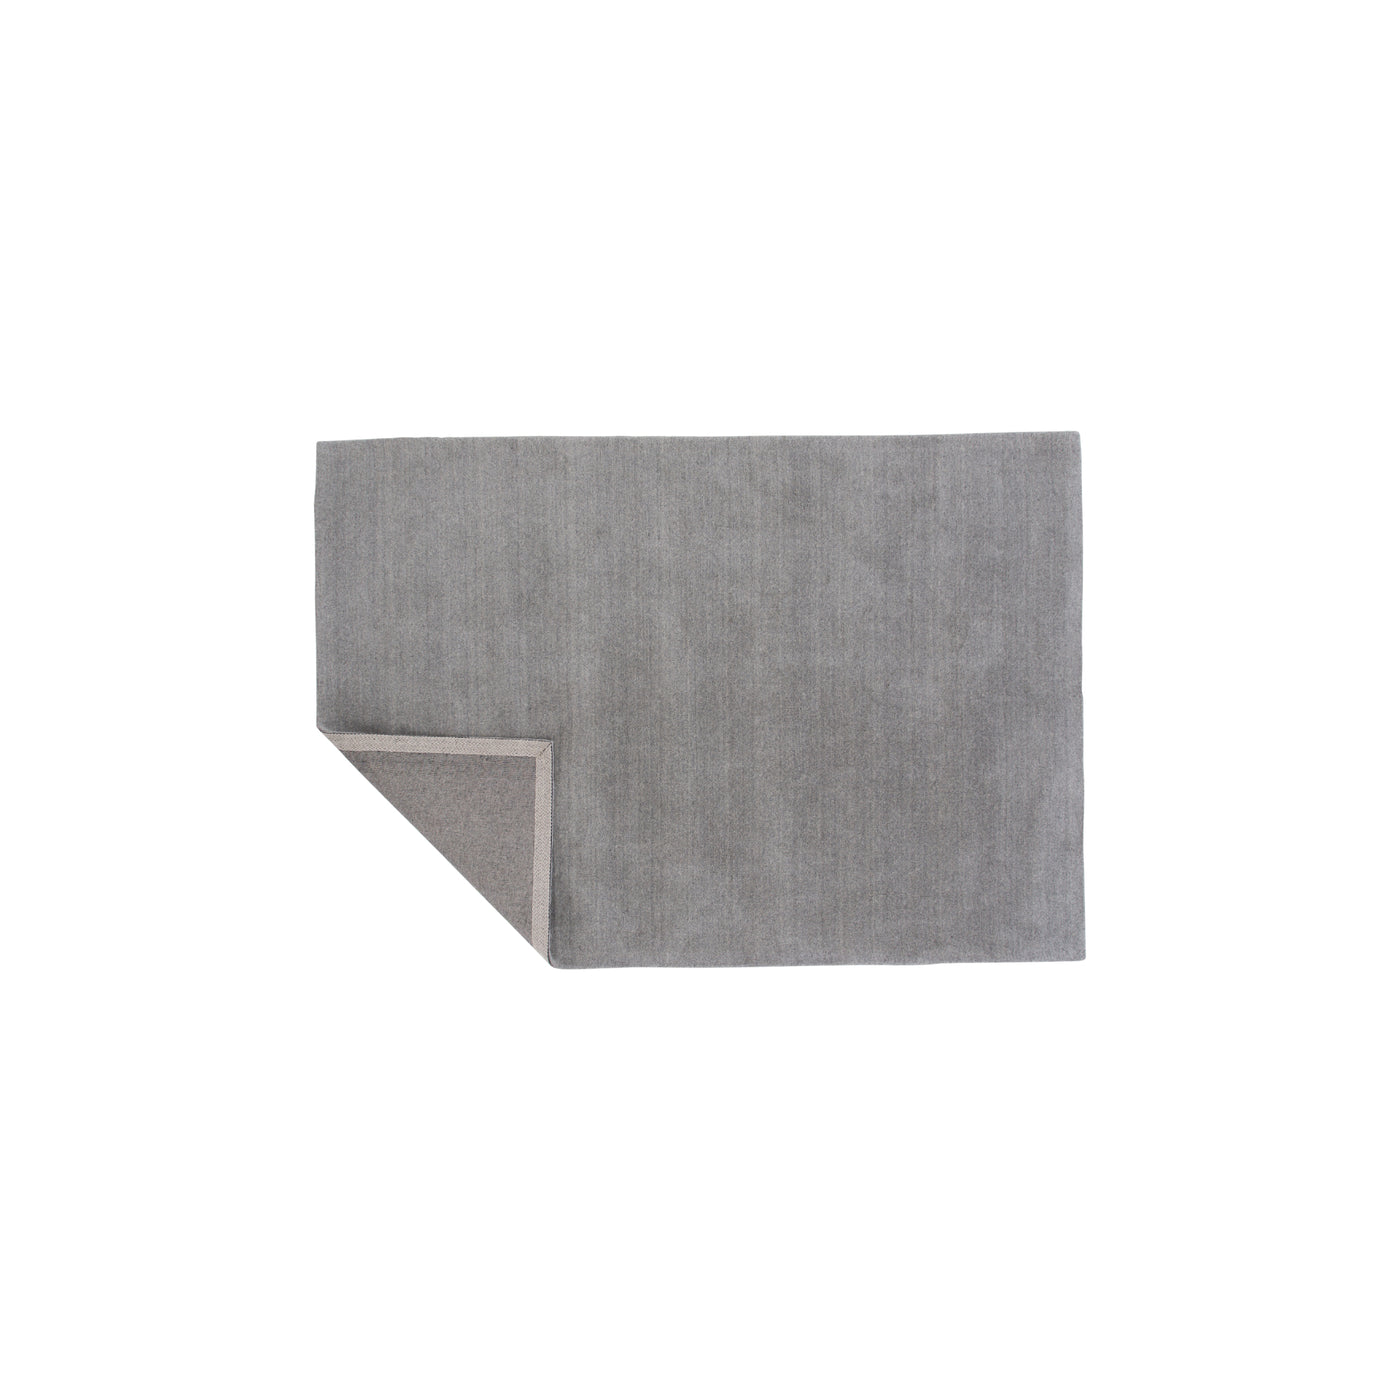 Ulrica - Teppich aus Wolle/Polyester - Hellgrau - L250*B350